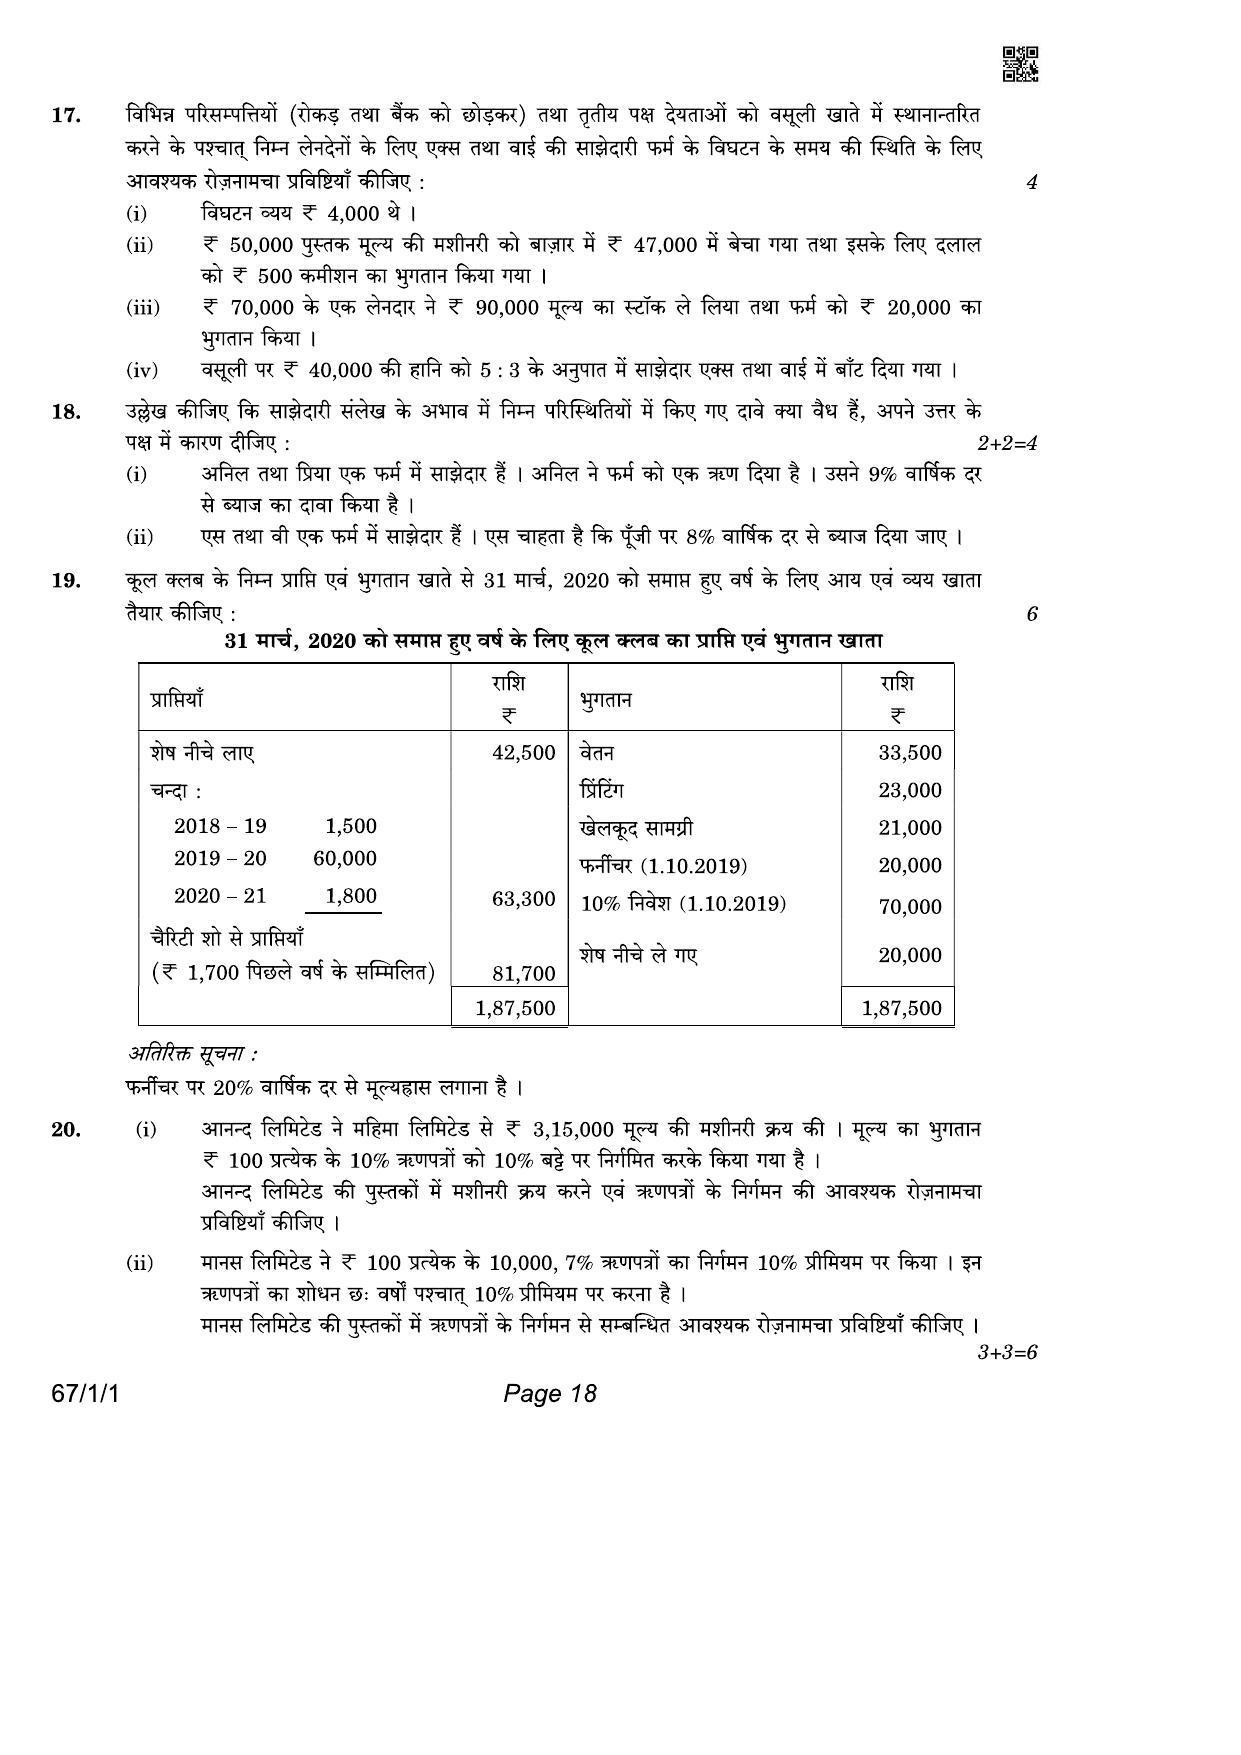 CBSE Class 12 QP_055_Accountancy 2021 Compartment Question Paper - Page 18